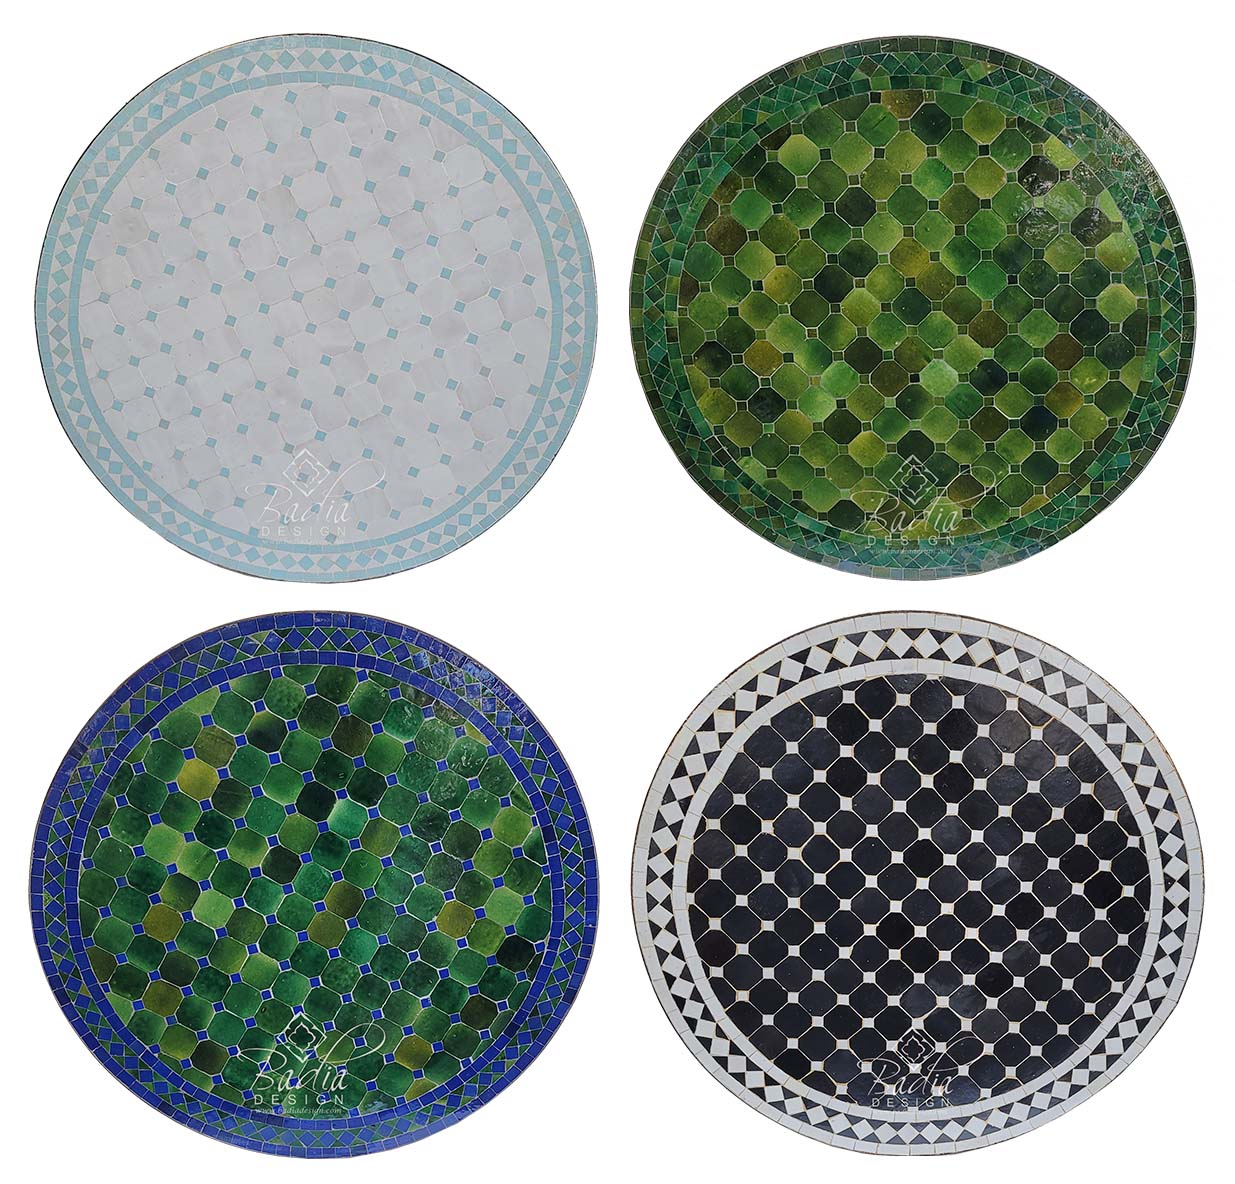 Moroccan Mosaic Ceramic Tile Table Top From Badia Design Inc